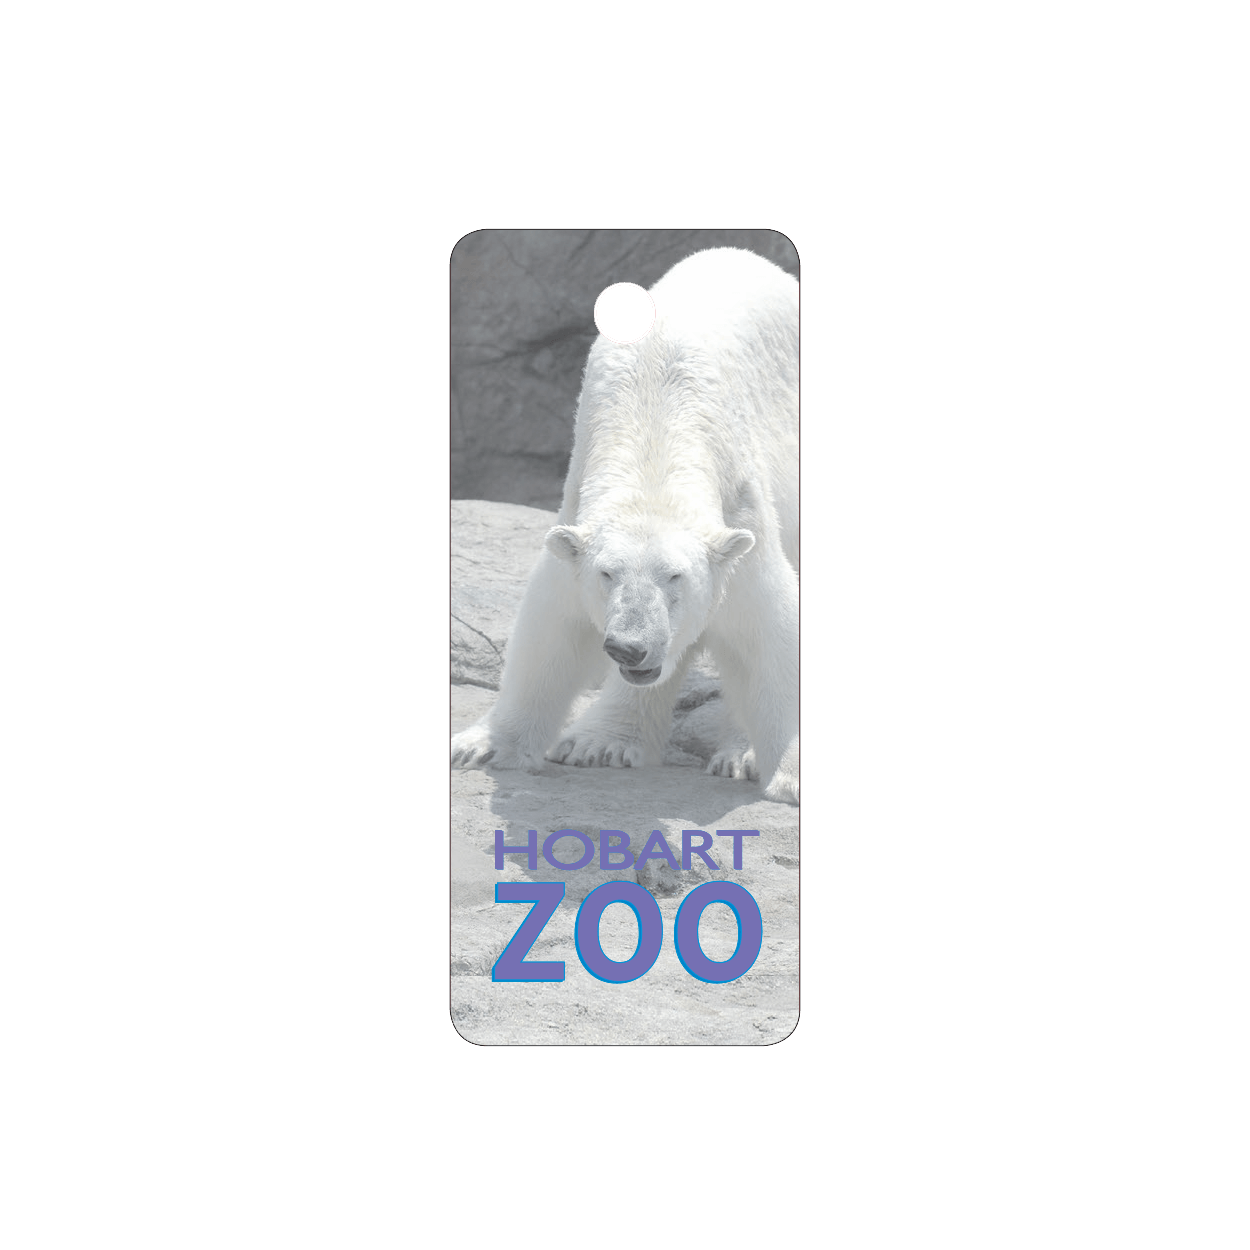 Hobart Zoo Key Tag Section